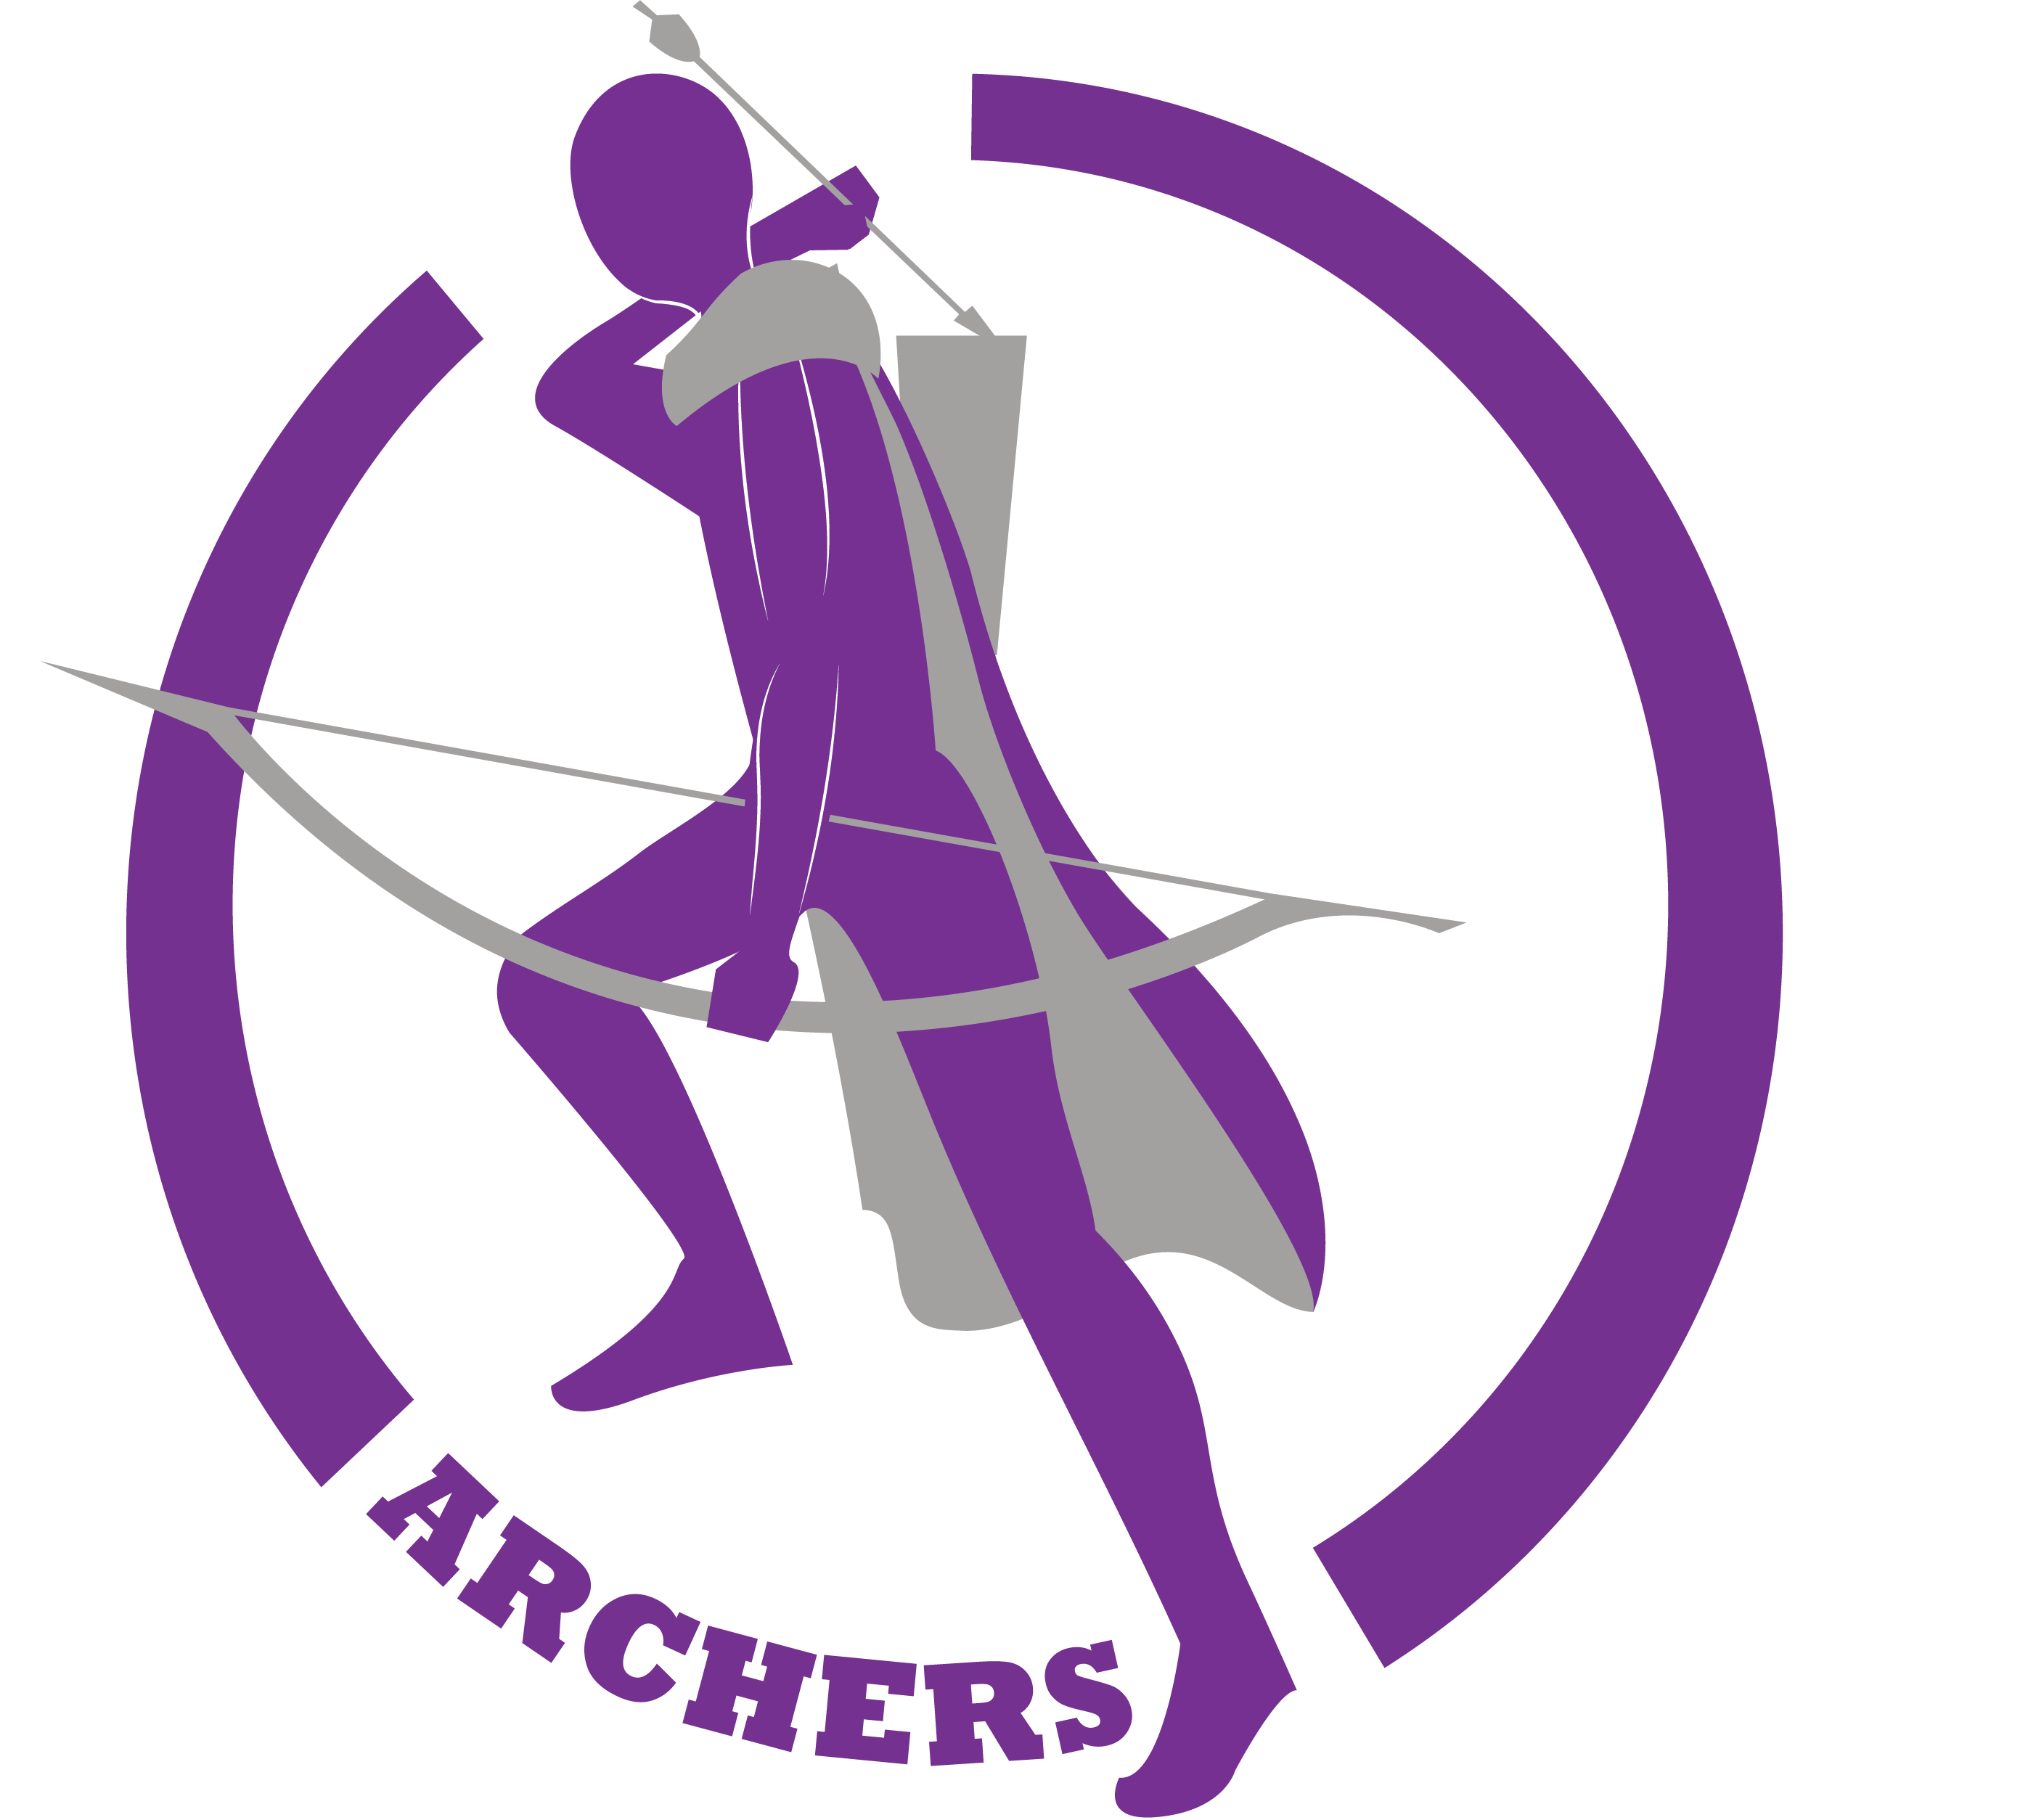 ACC Archers Mascot